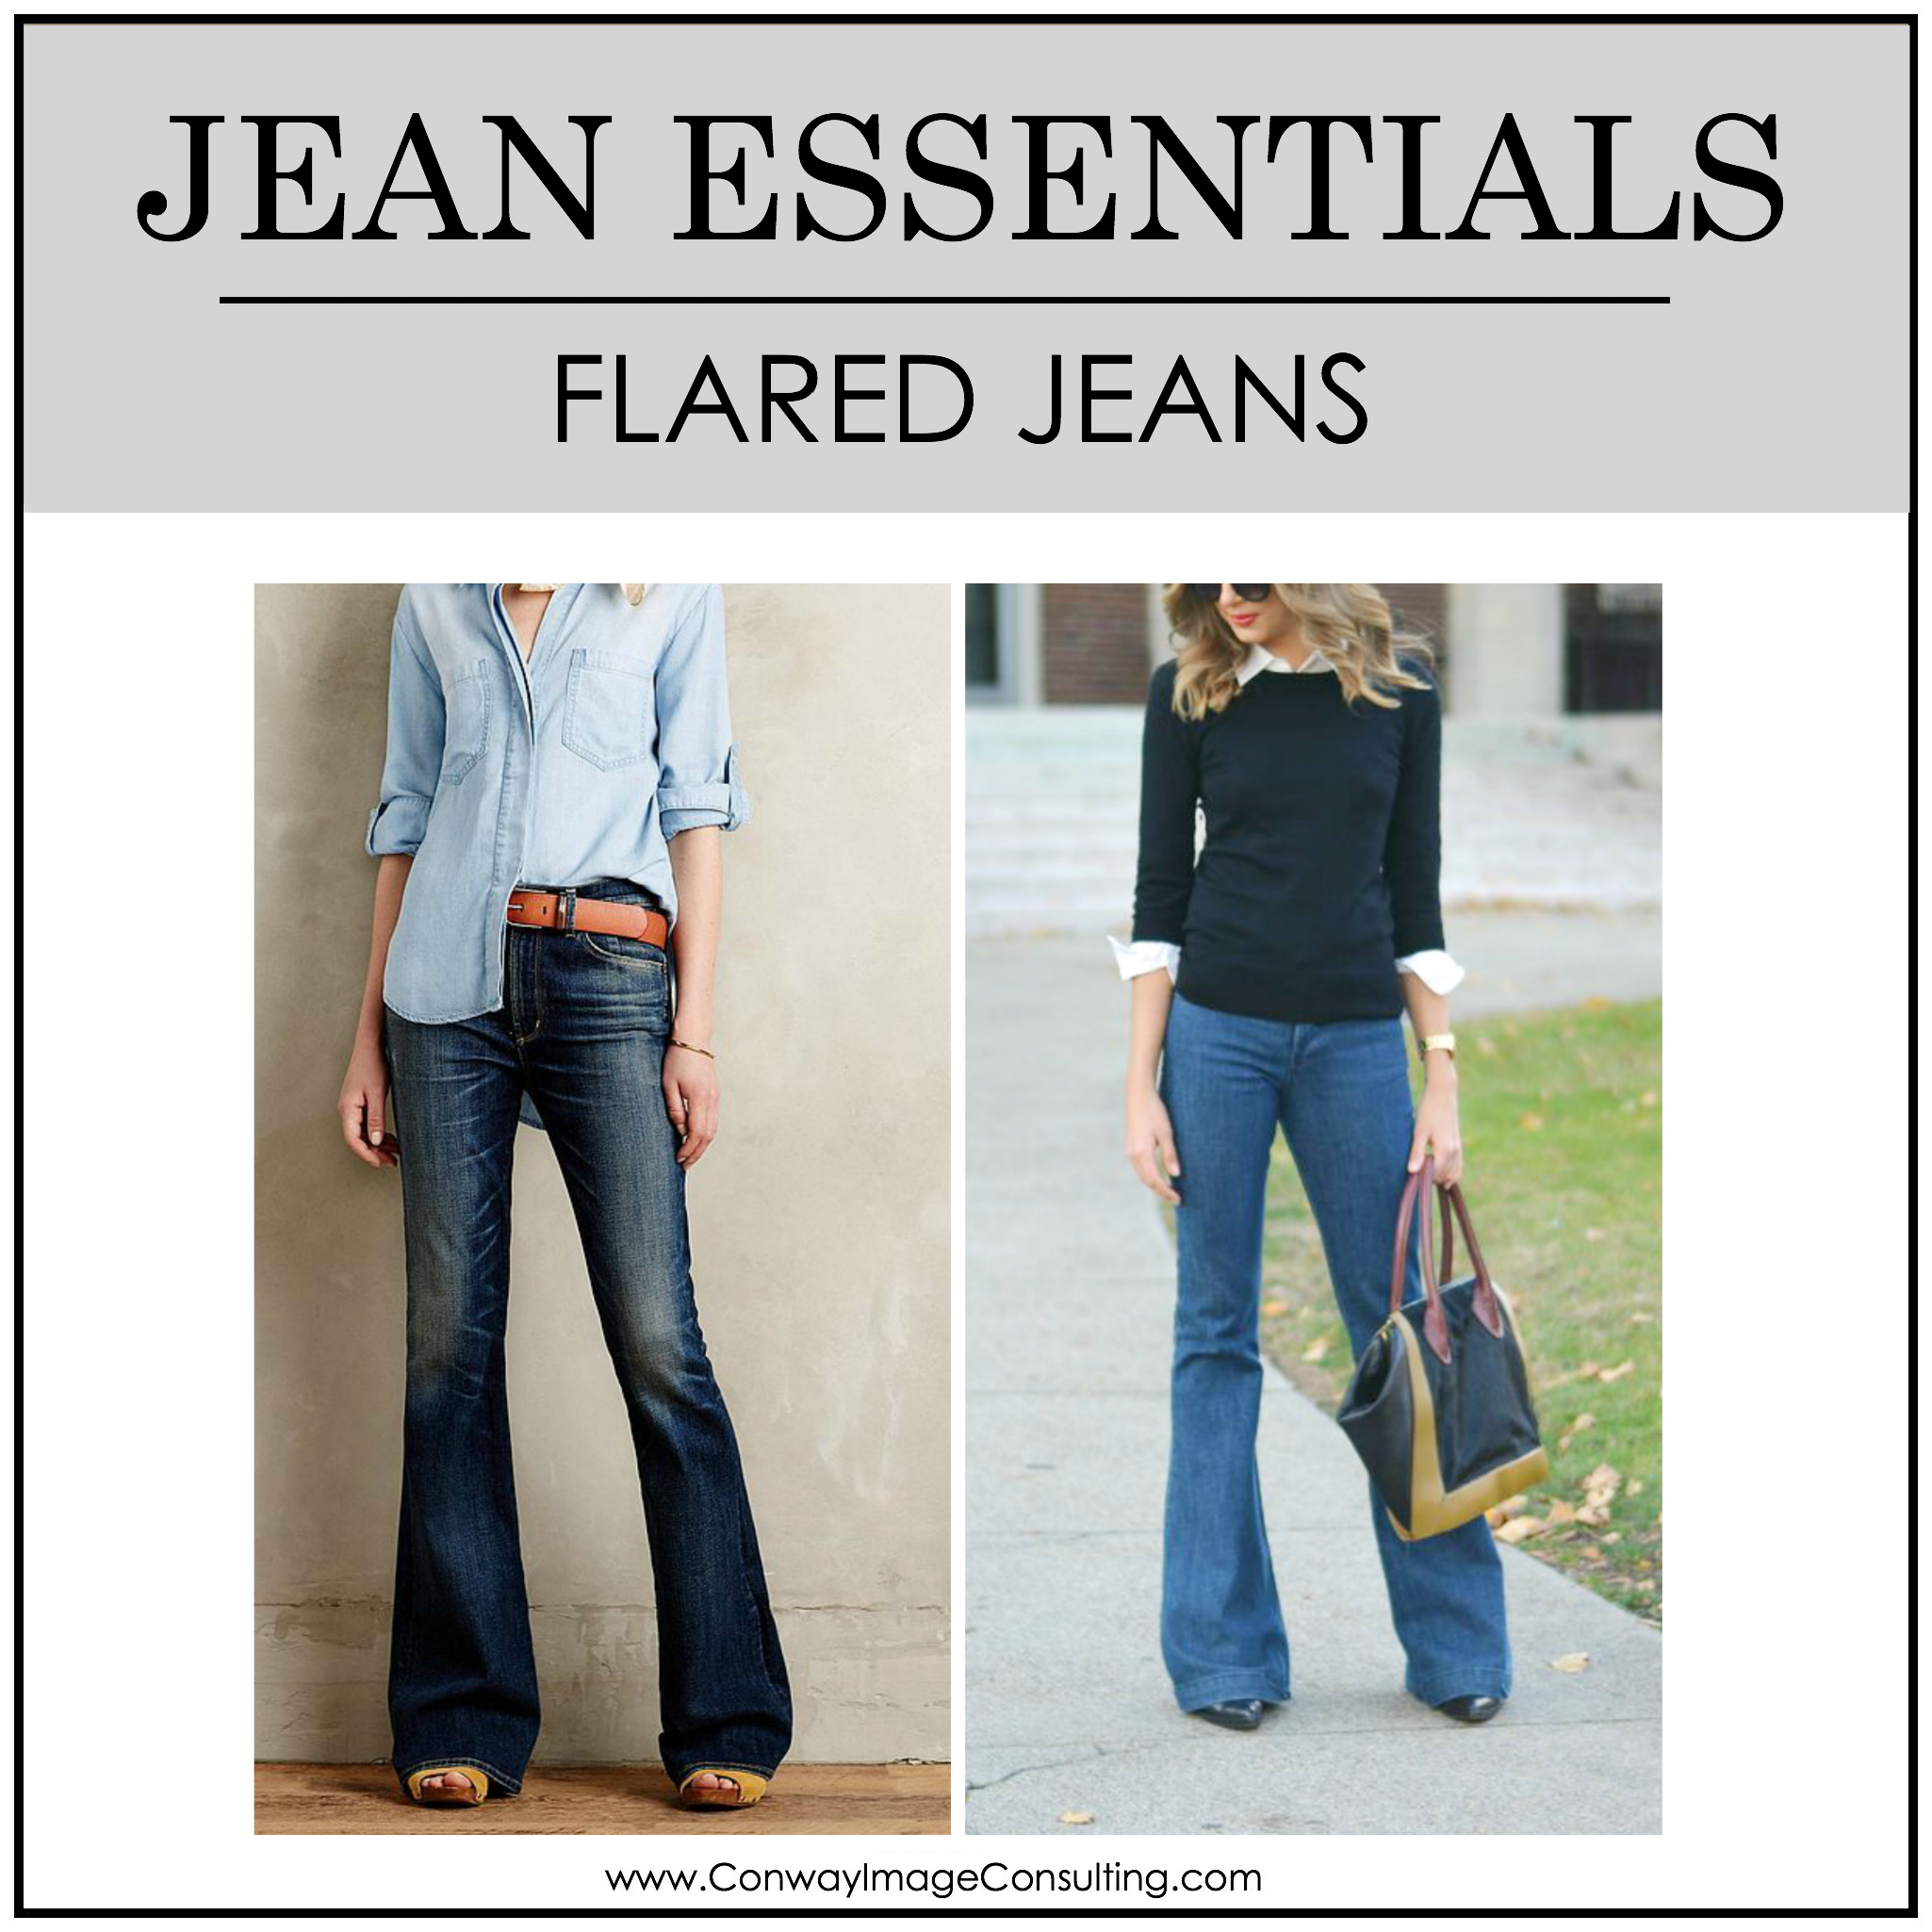 Jean Essentials: Flared Jeans